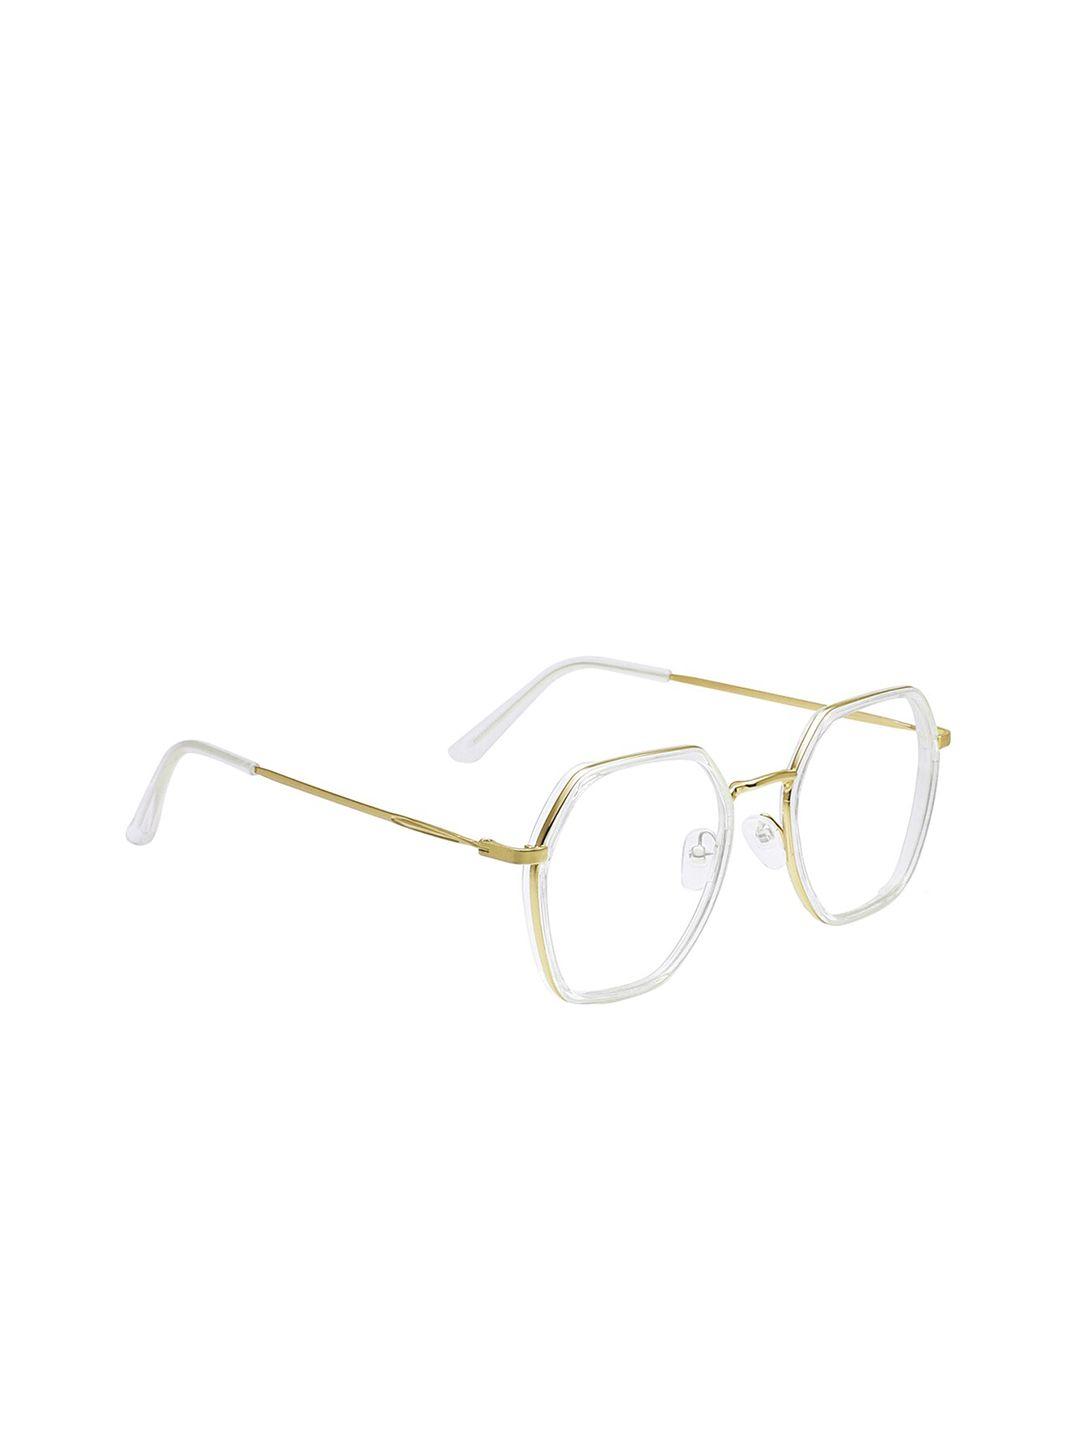 peter jones eyewear unisex transparent & gold-toned full rim square frames